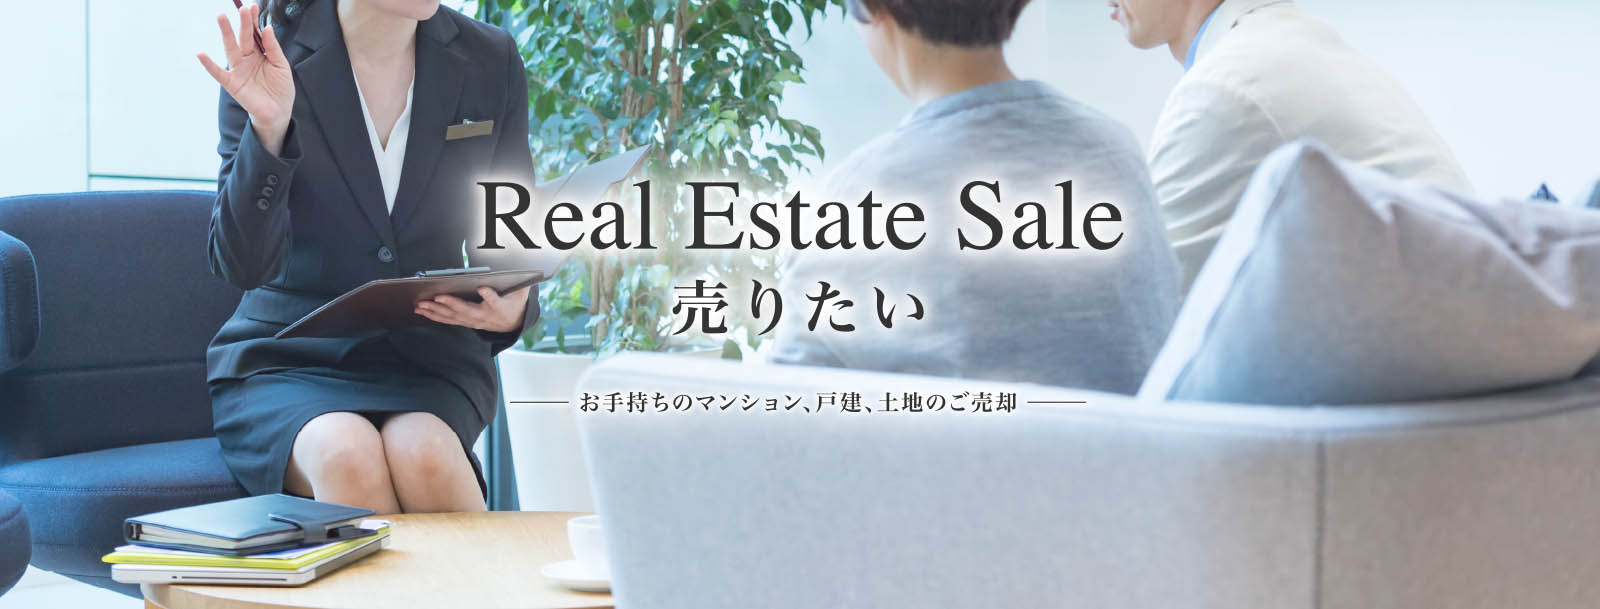 Real Estate Sale 売りたい お手持ちのマンション、戸建、土地のご売却